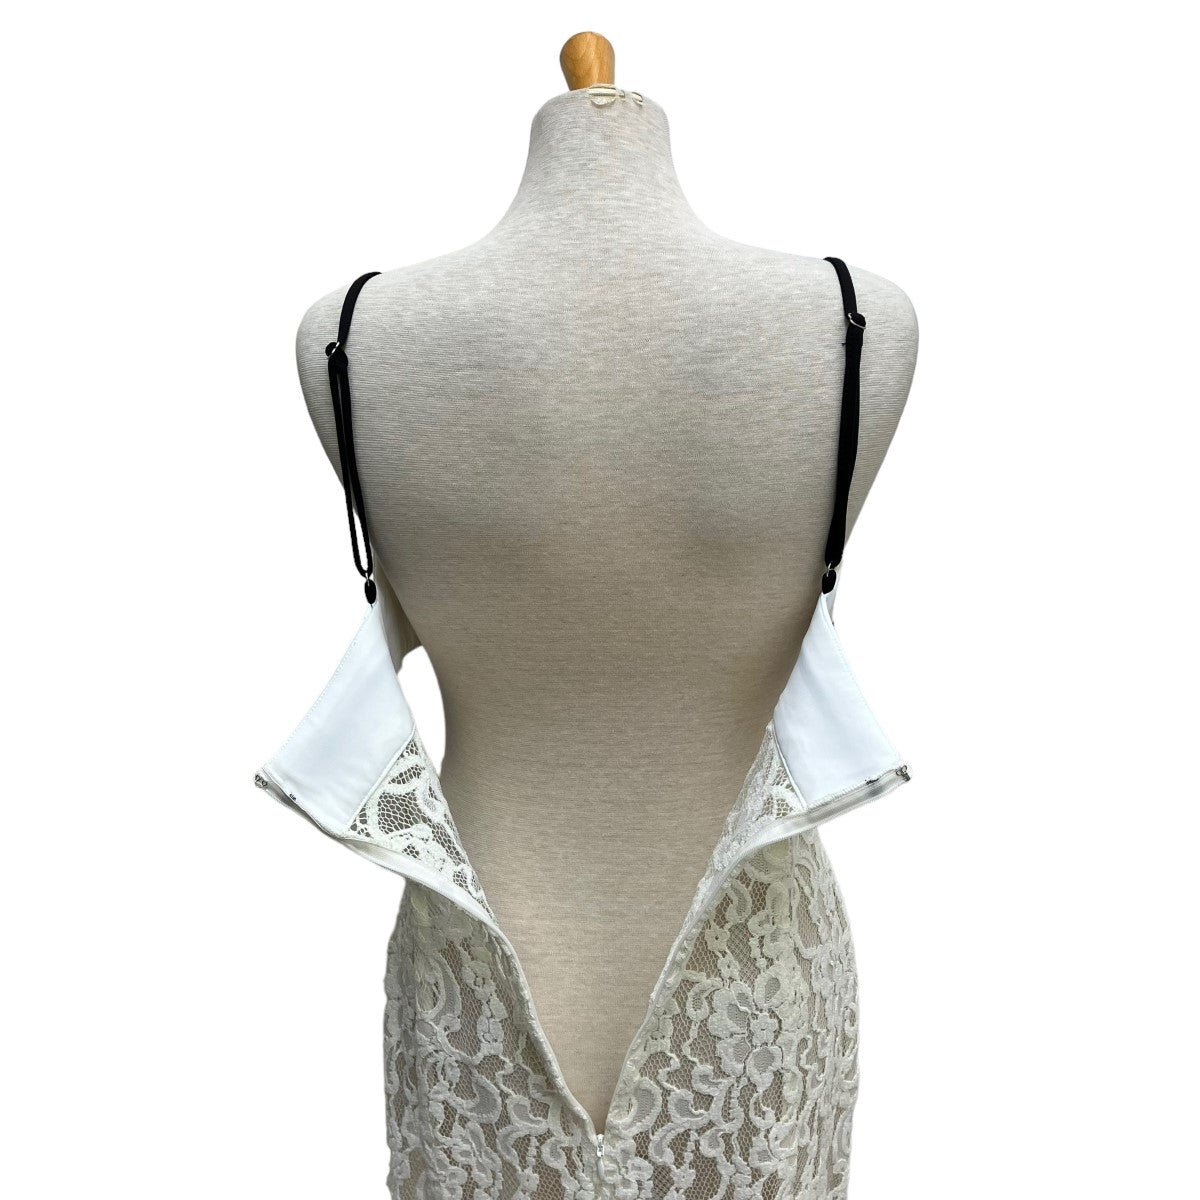 PRANK PROJECT(プランクプロジェクト) Scuba-Jersey Lace Dress　ワンピース31231265403